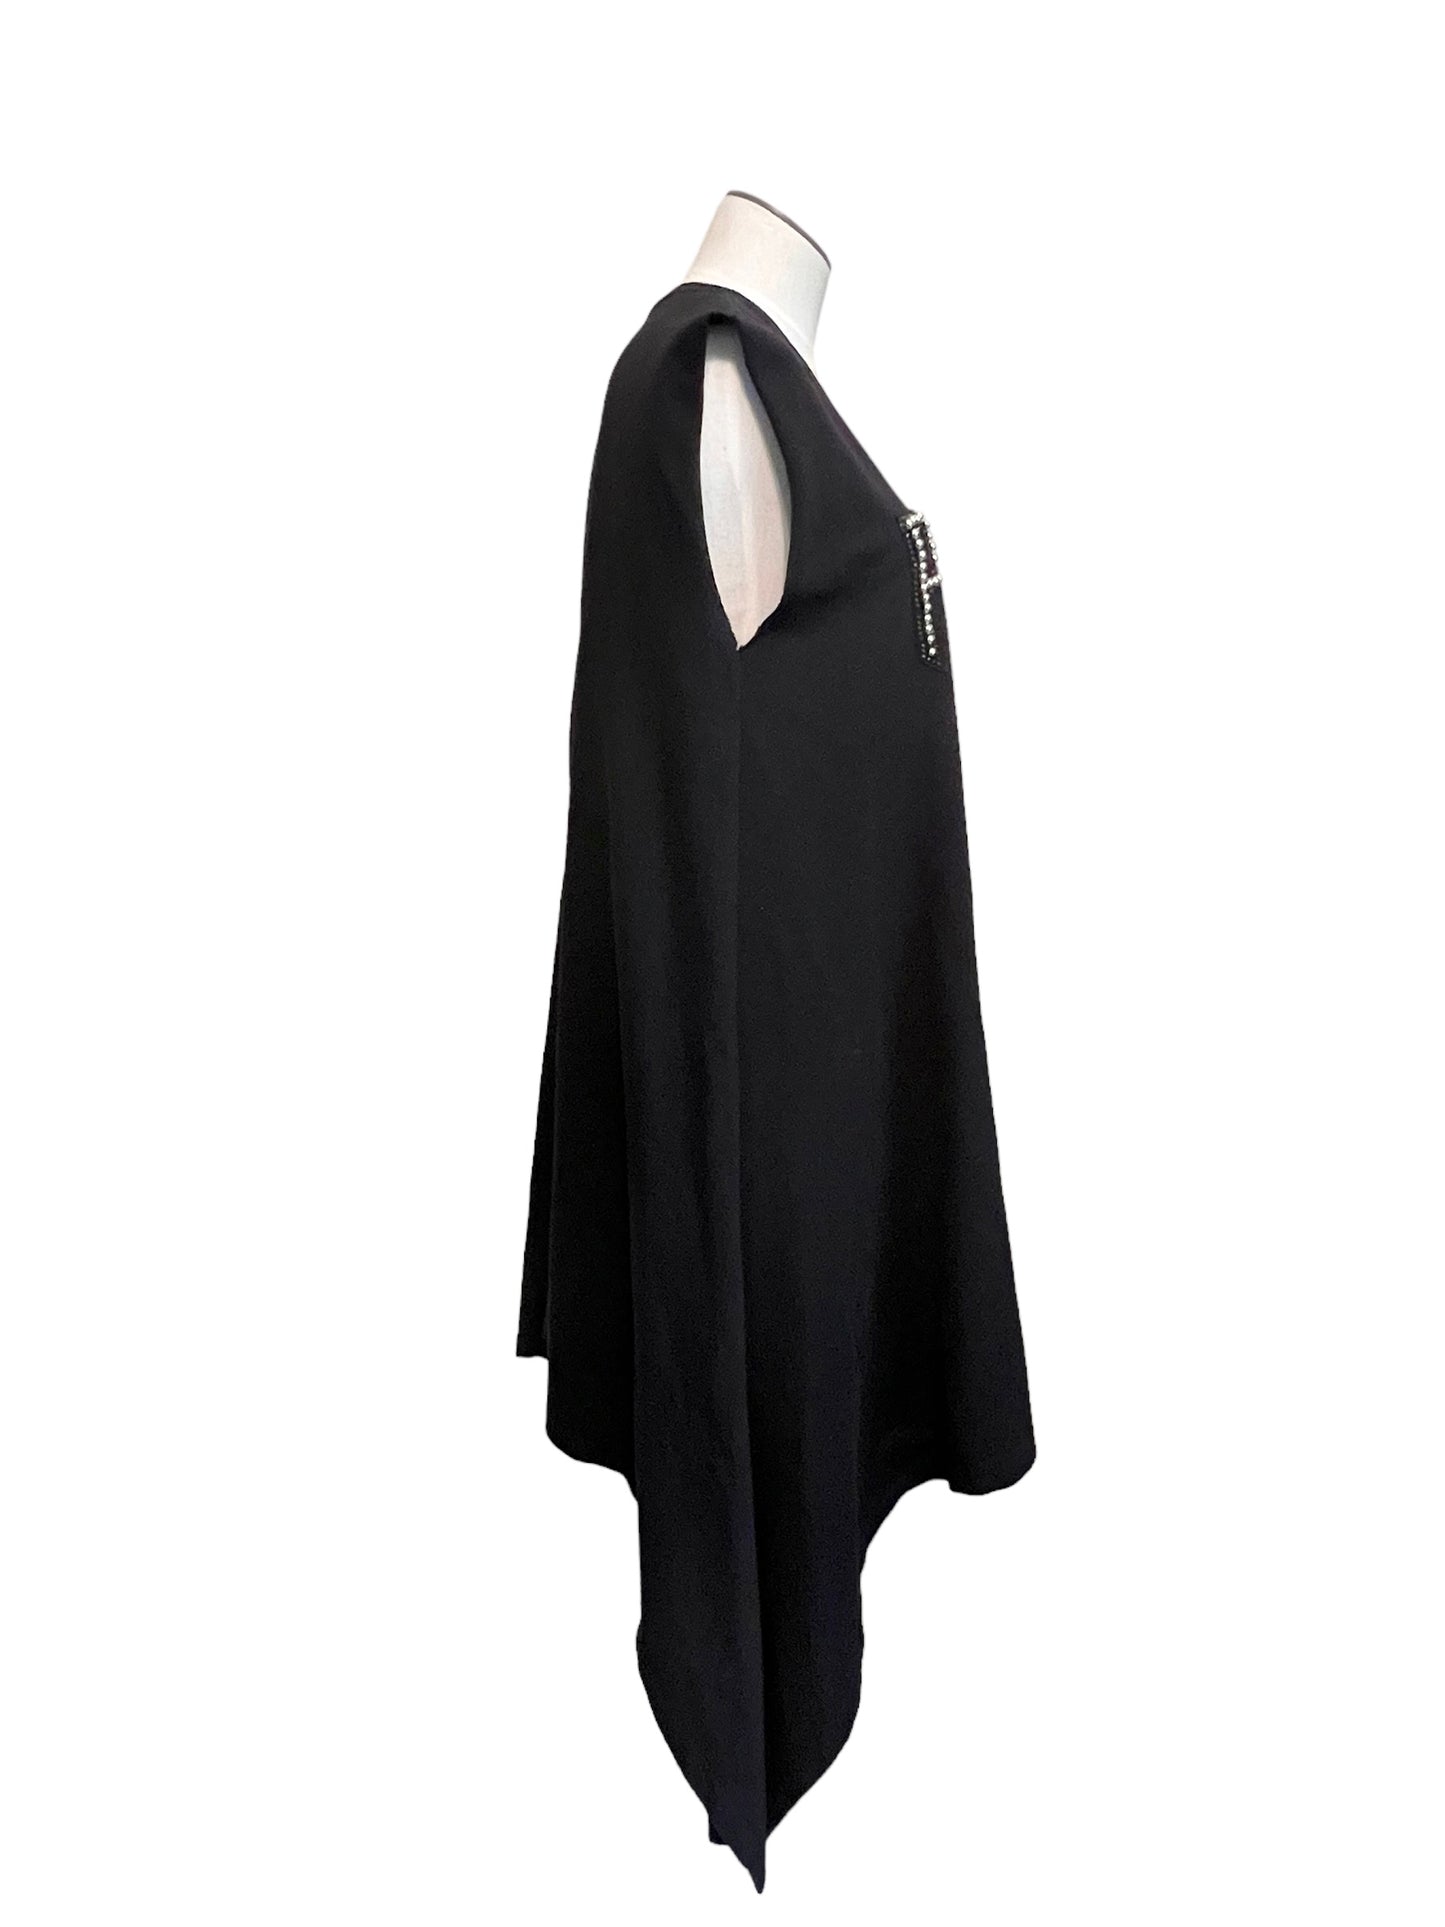 Odi et Amo Size S Black Graphic Dress